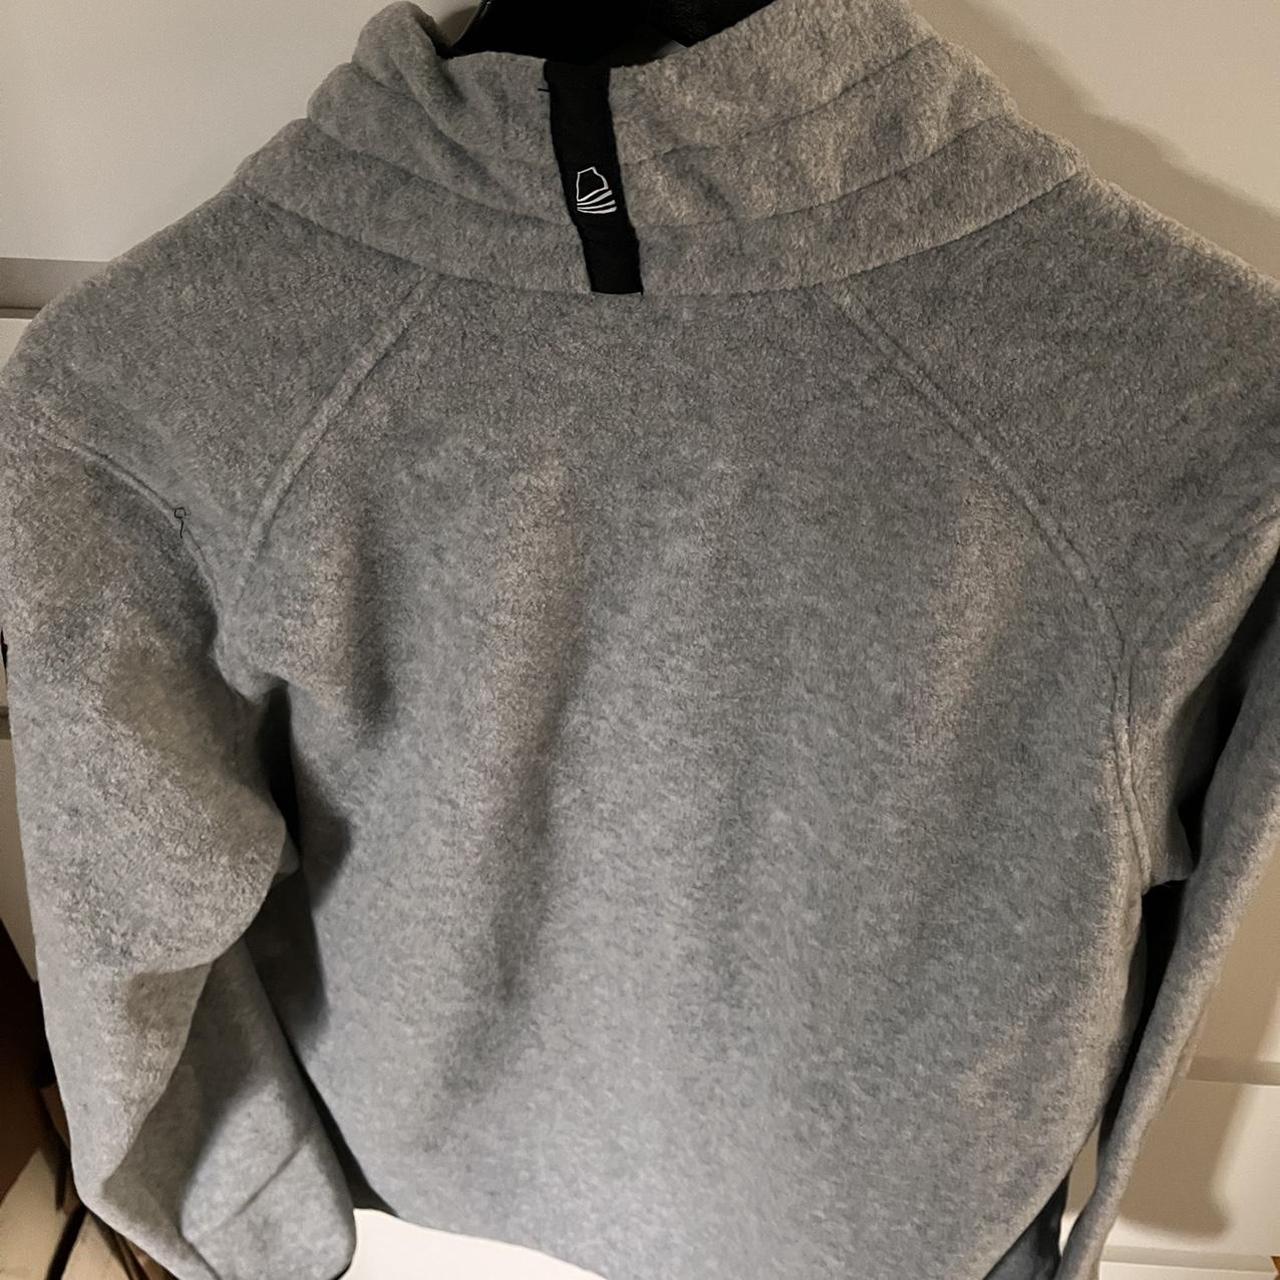 Product Image 4 - Fleece/ cotton jacket from Decathlon.